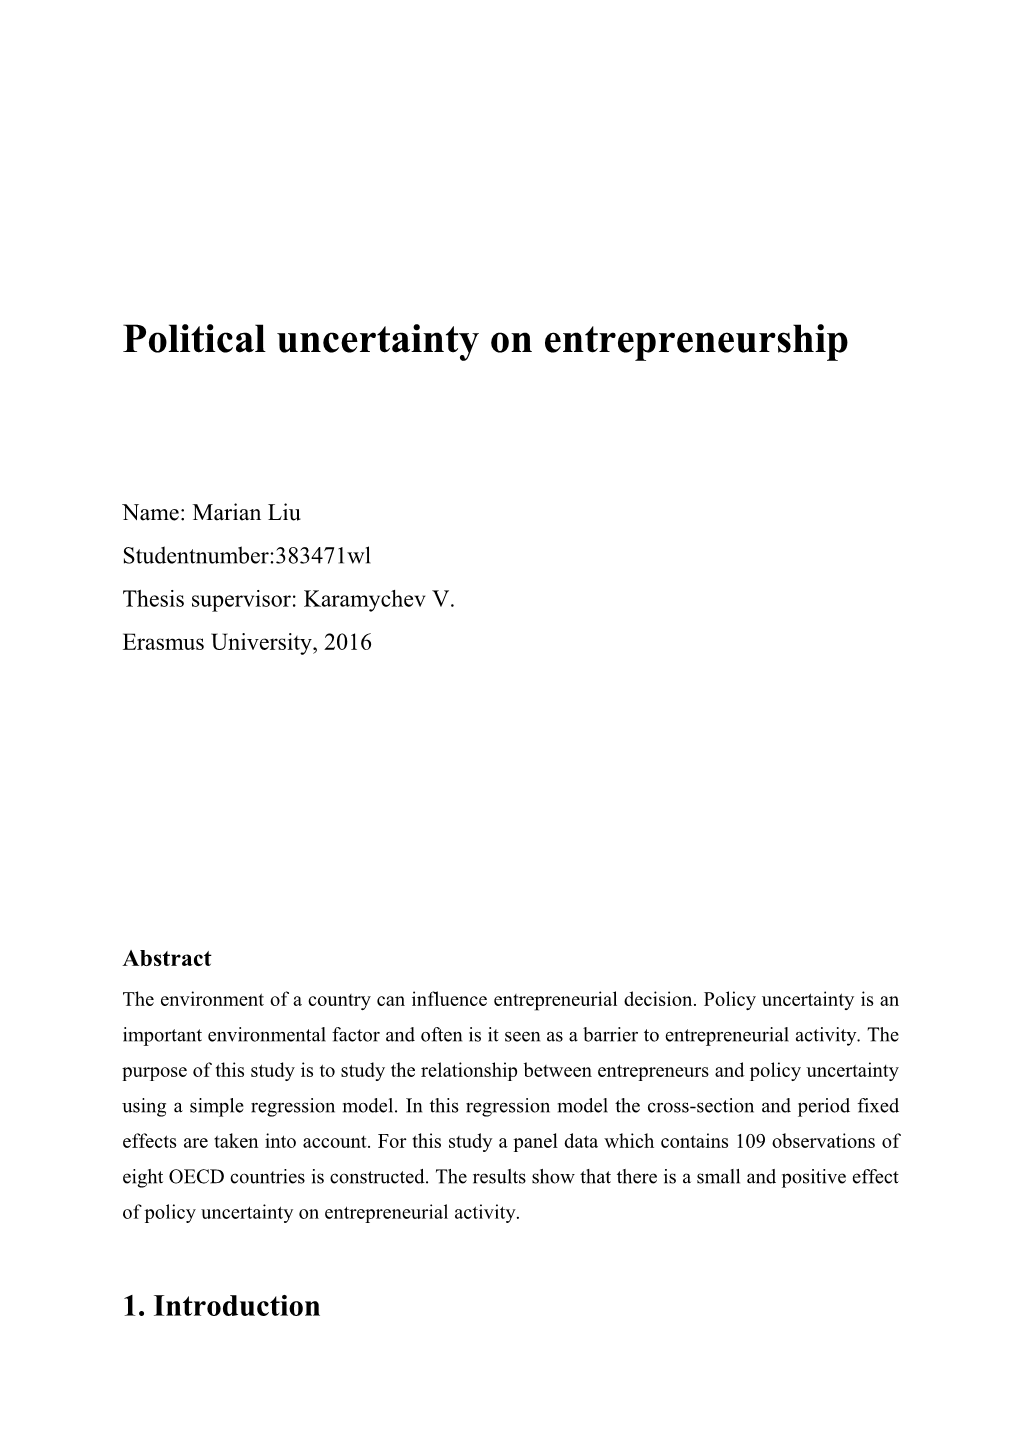 Political Uncertainty on Entrepreneurship